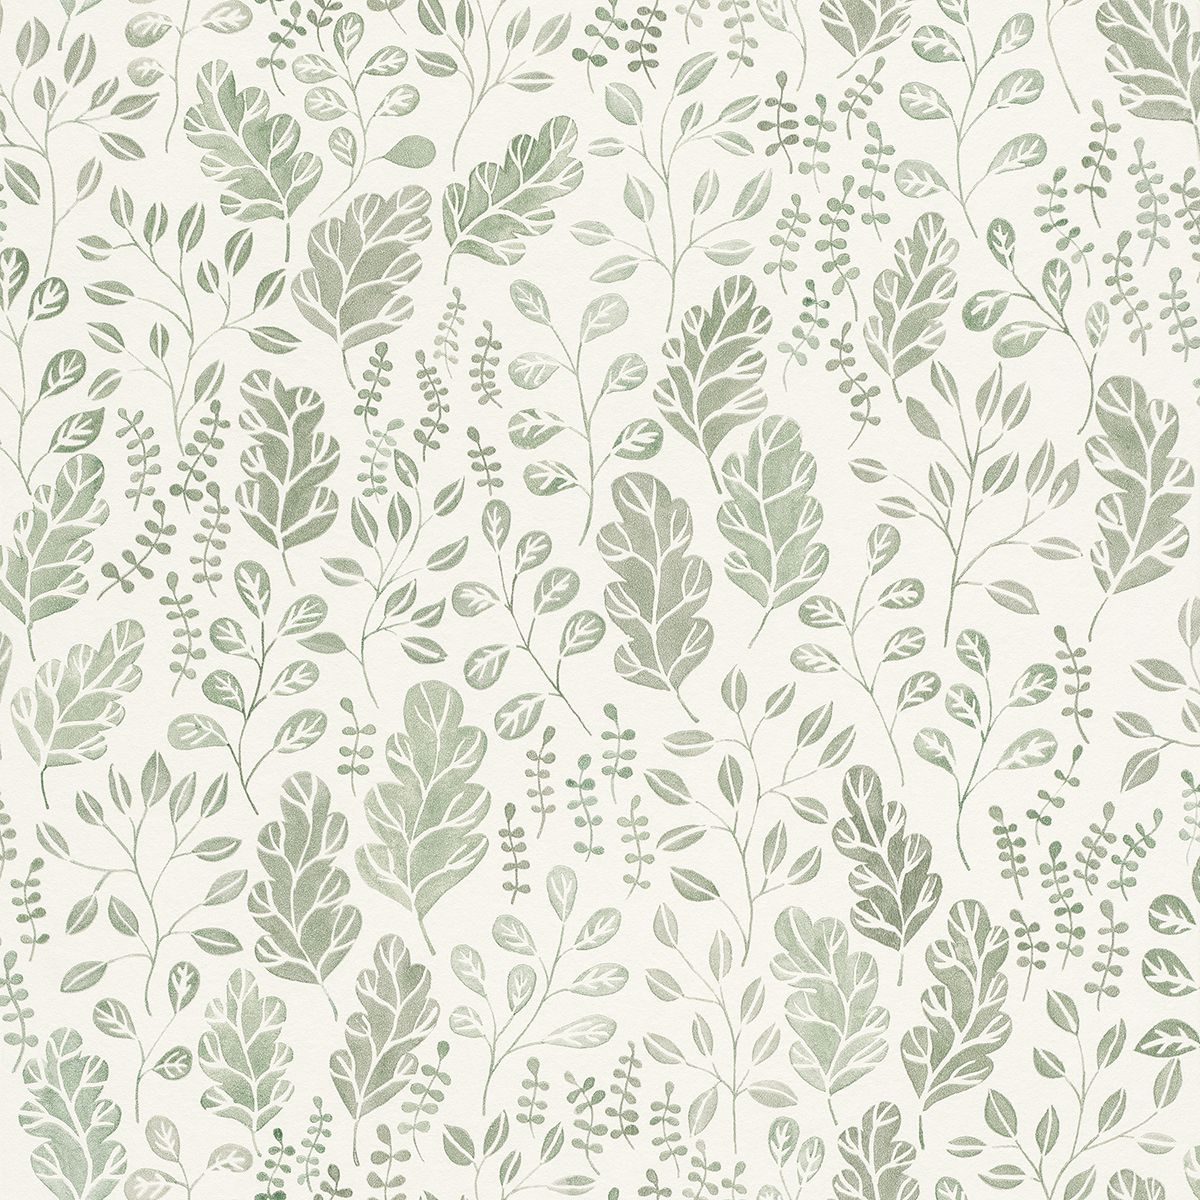 2948-27014 - Isha Green Leaf Wallpaper - by A-Street Prints